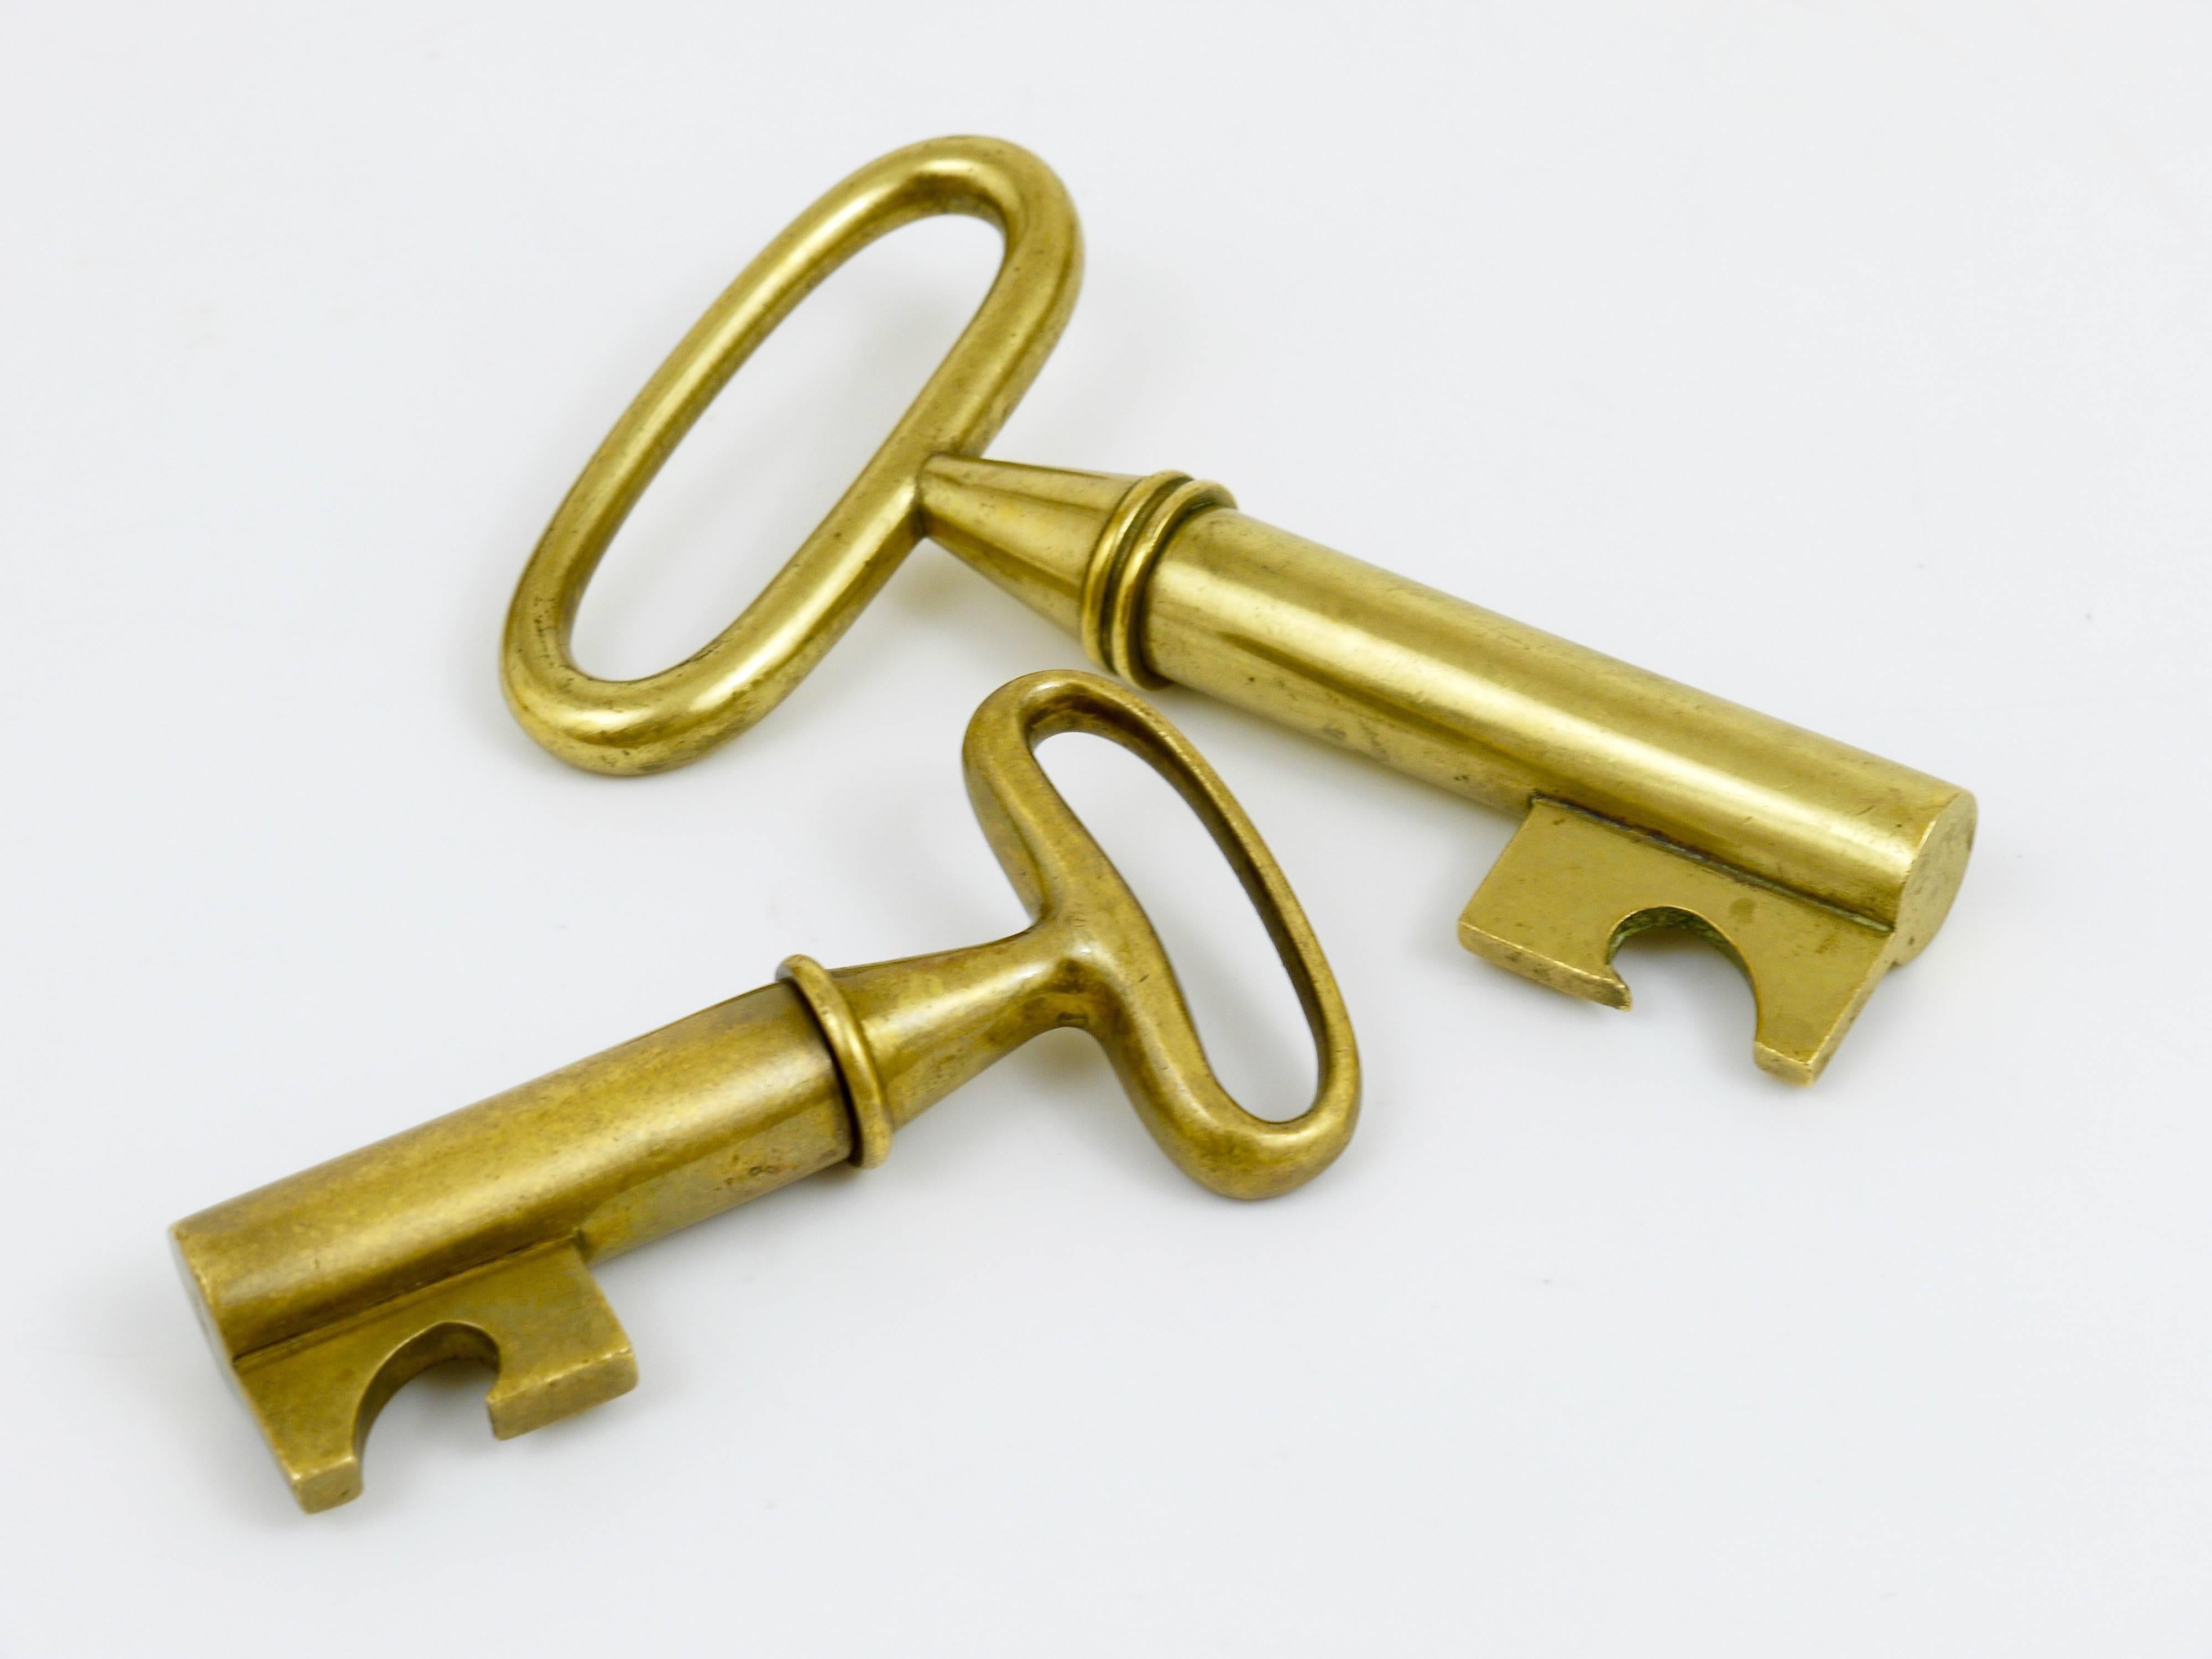 20th Century Carl Aubock Brass Key Cork Screw, Bottle Opener, Austria, 1950s